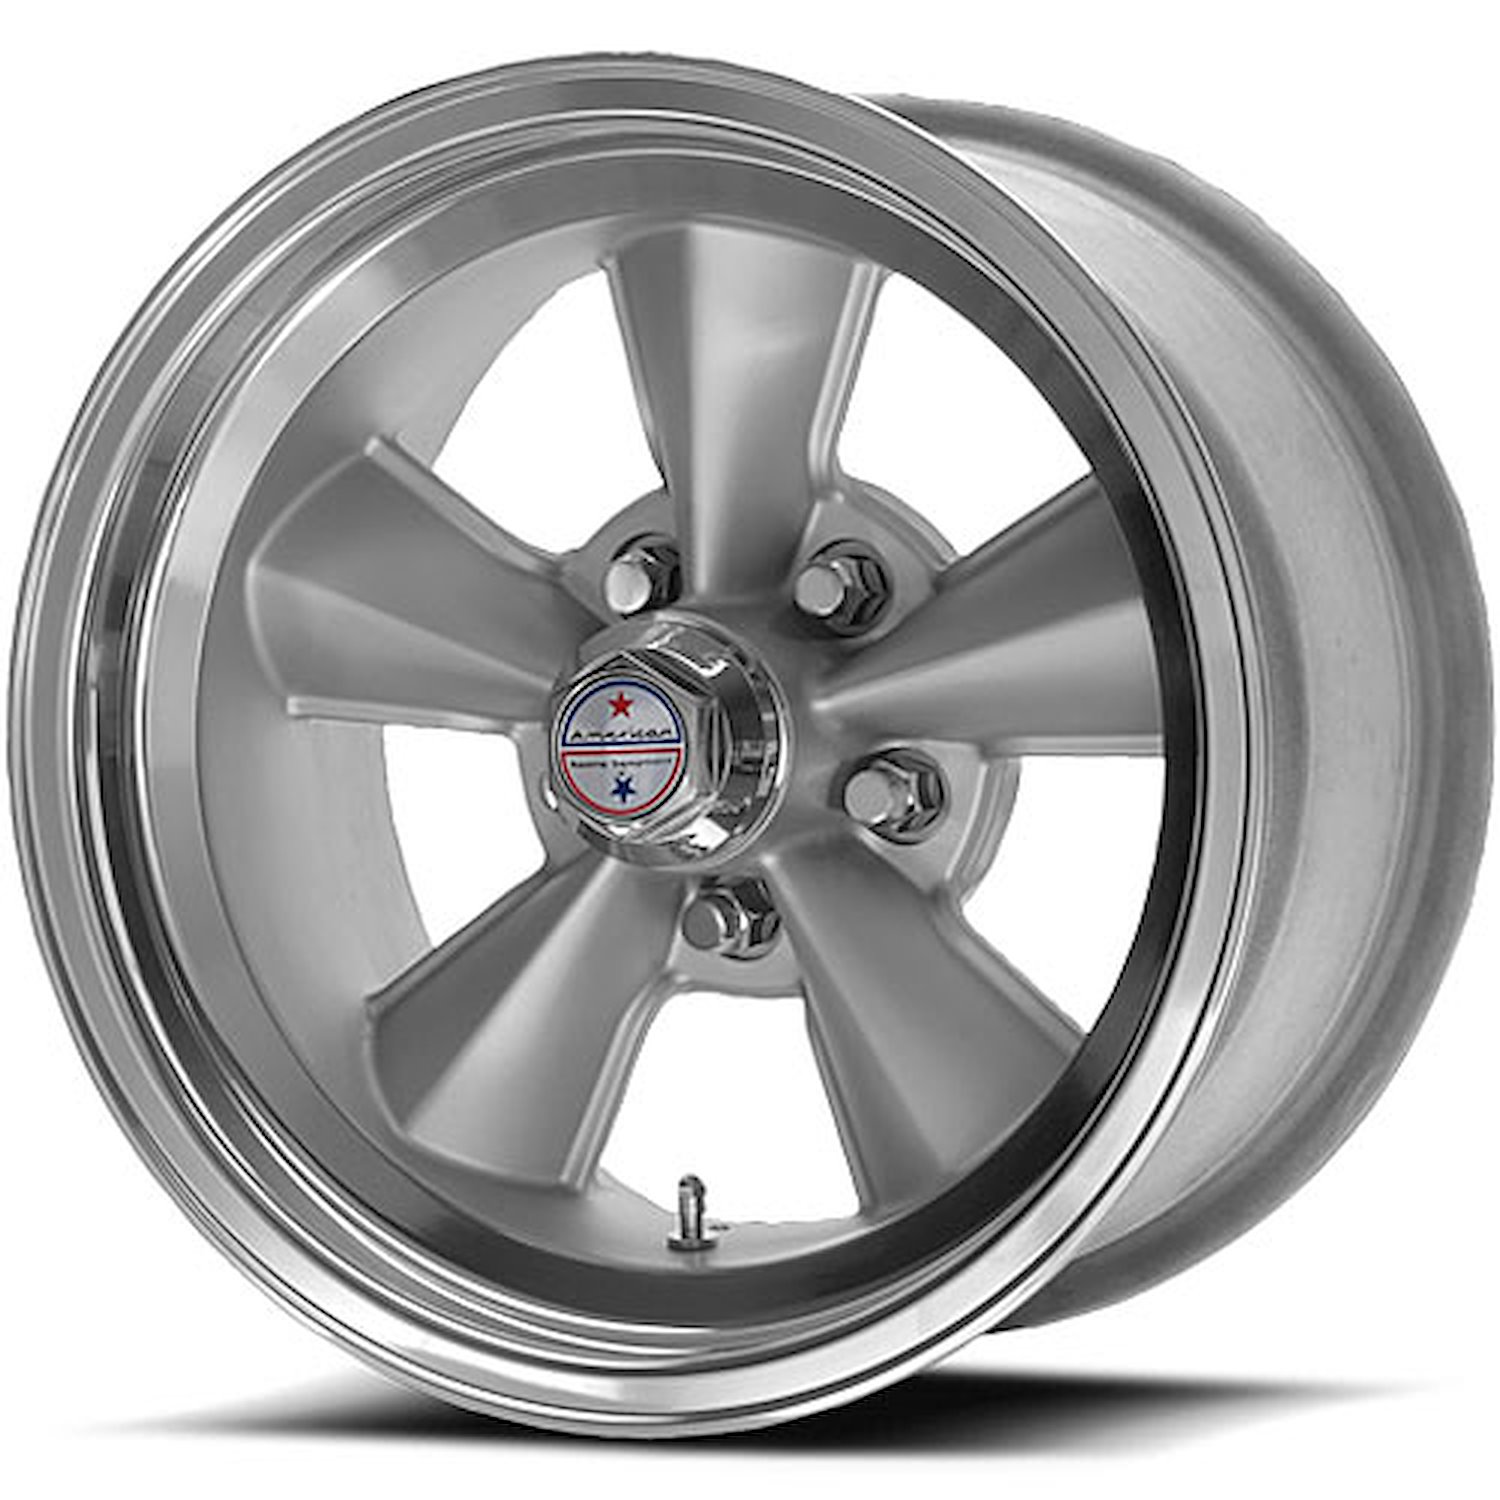 VNT70R Series Wheel Size: 17" x 8"